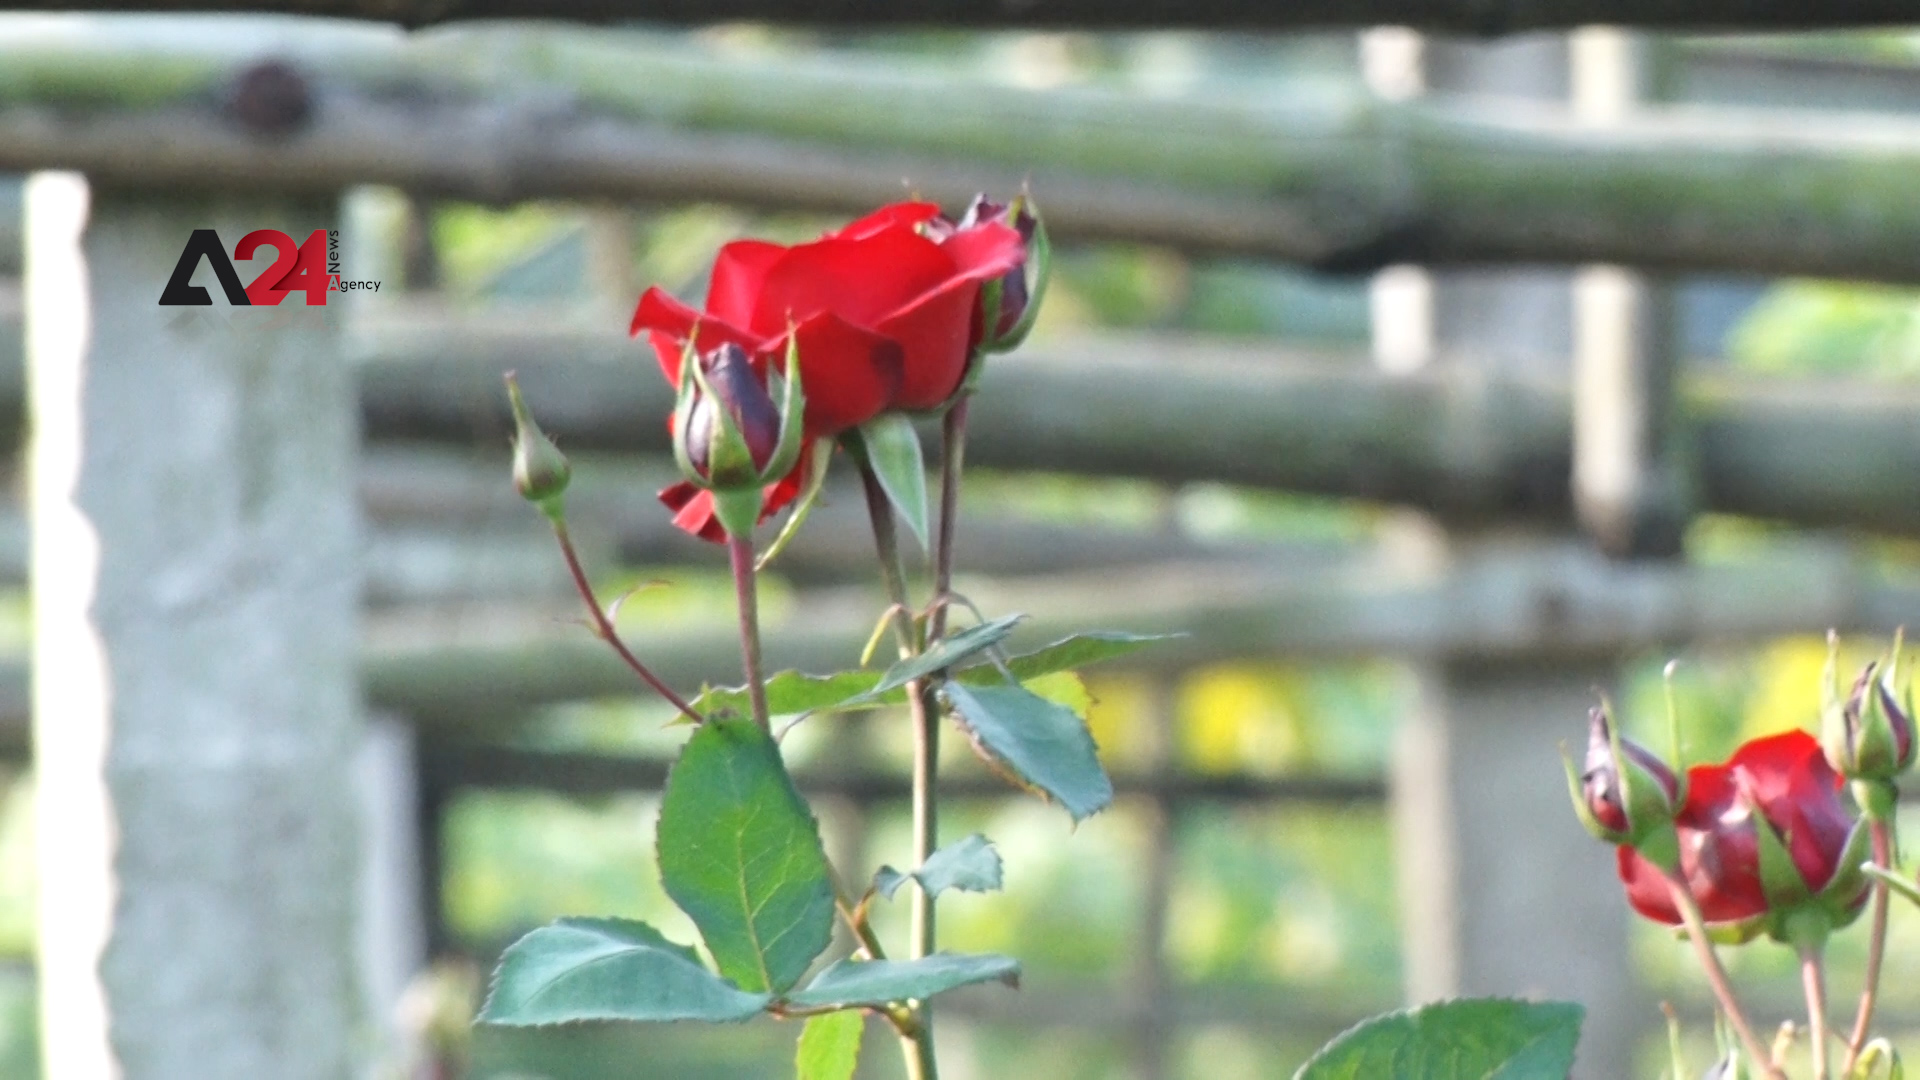 Bangladesh – Flower farming profitable business despite import difficulties